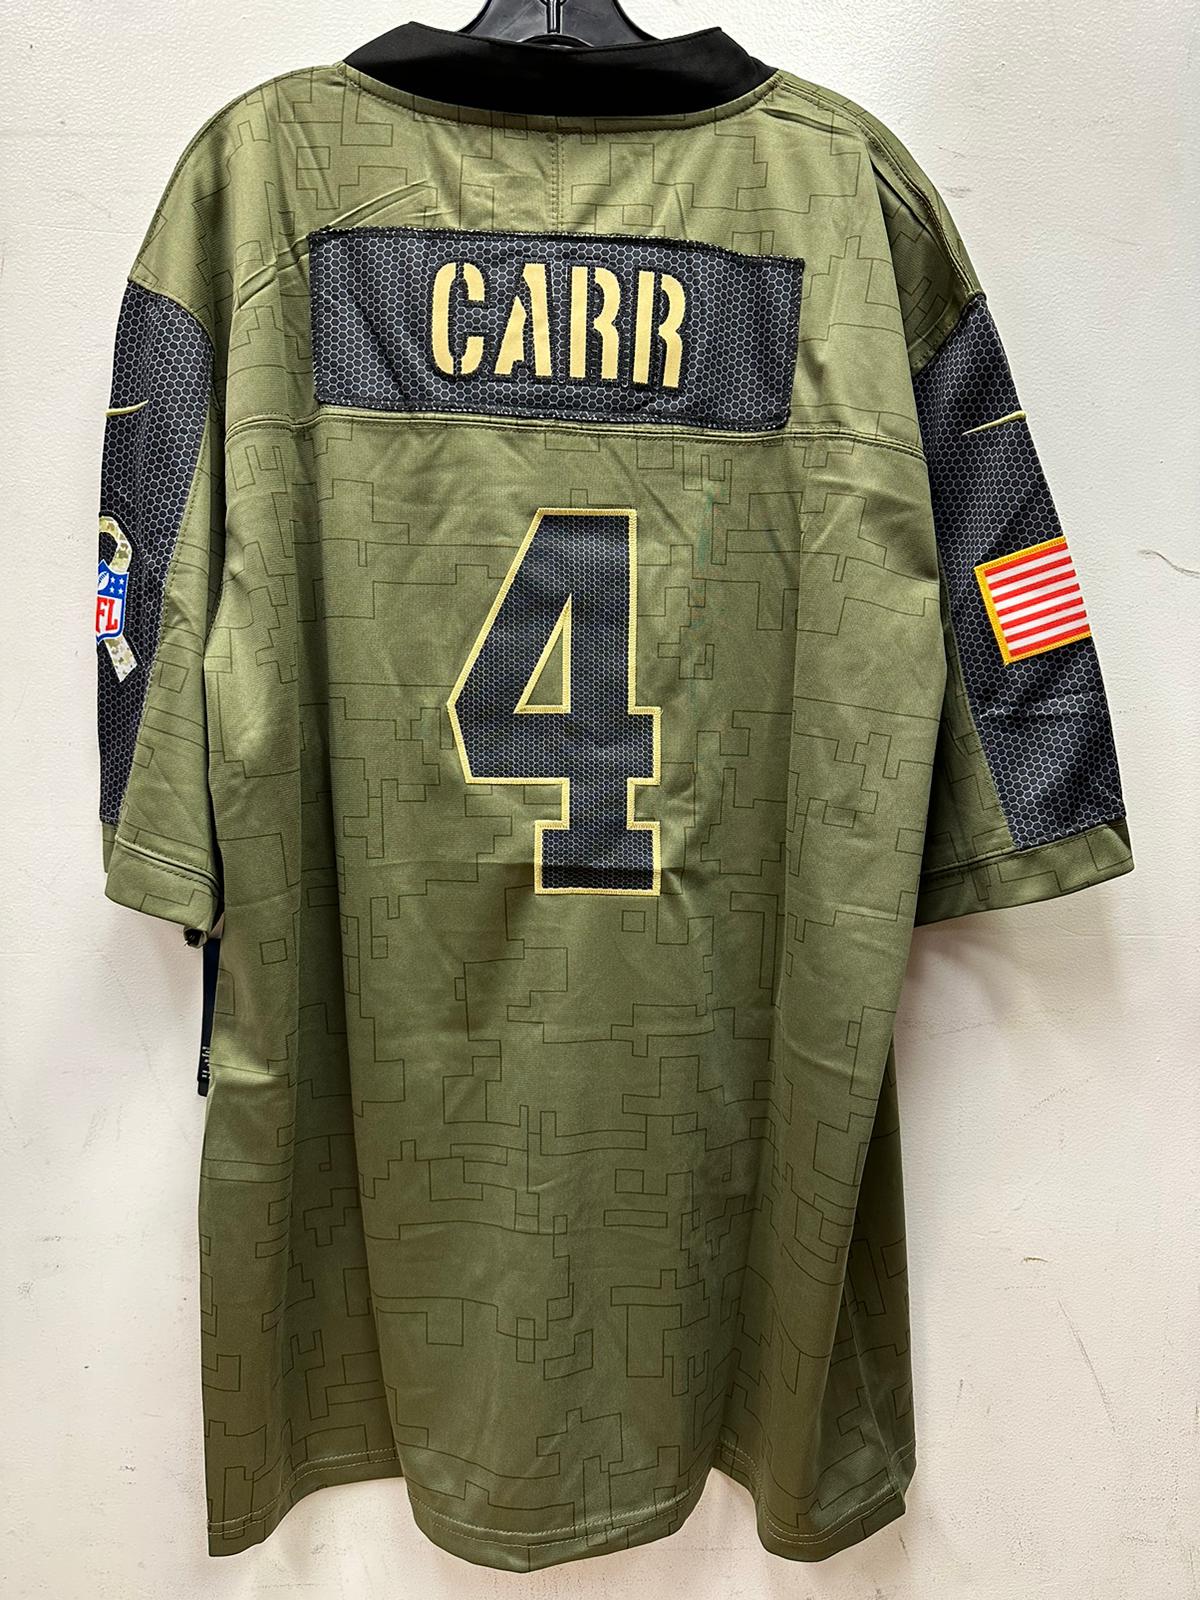 Derek Carr New Orleans Saints Salute to Service Jersey